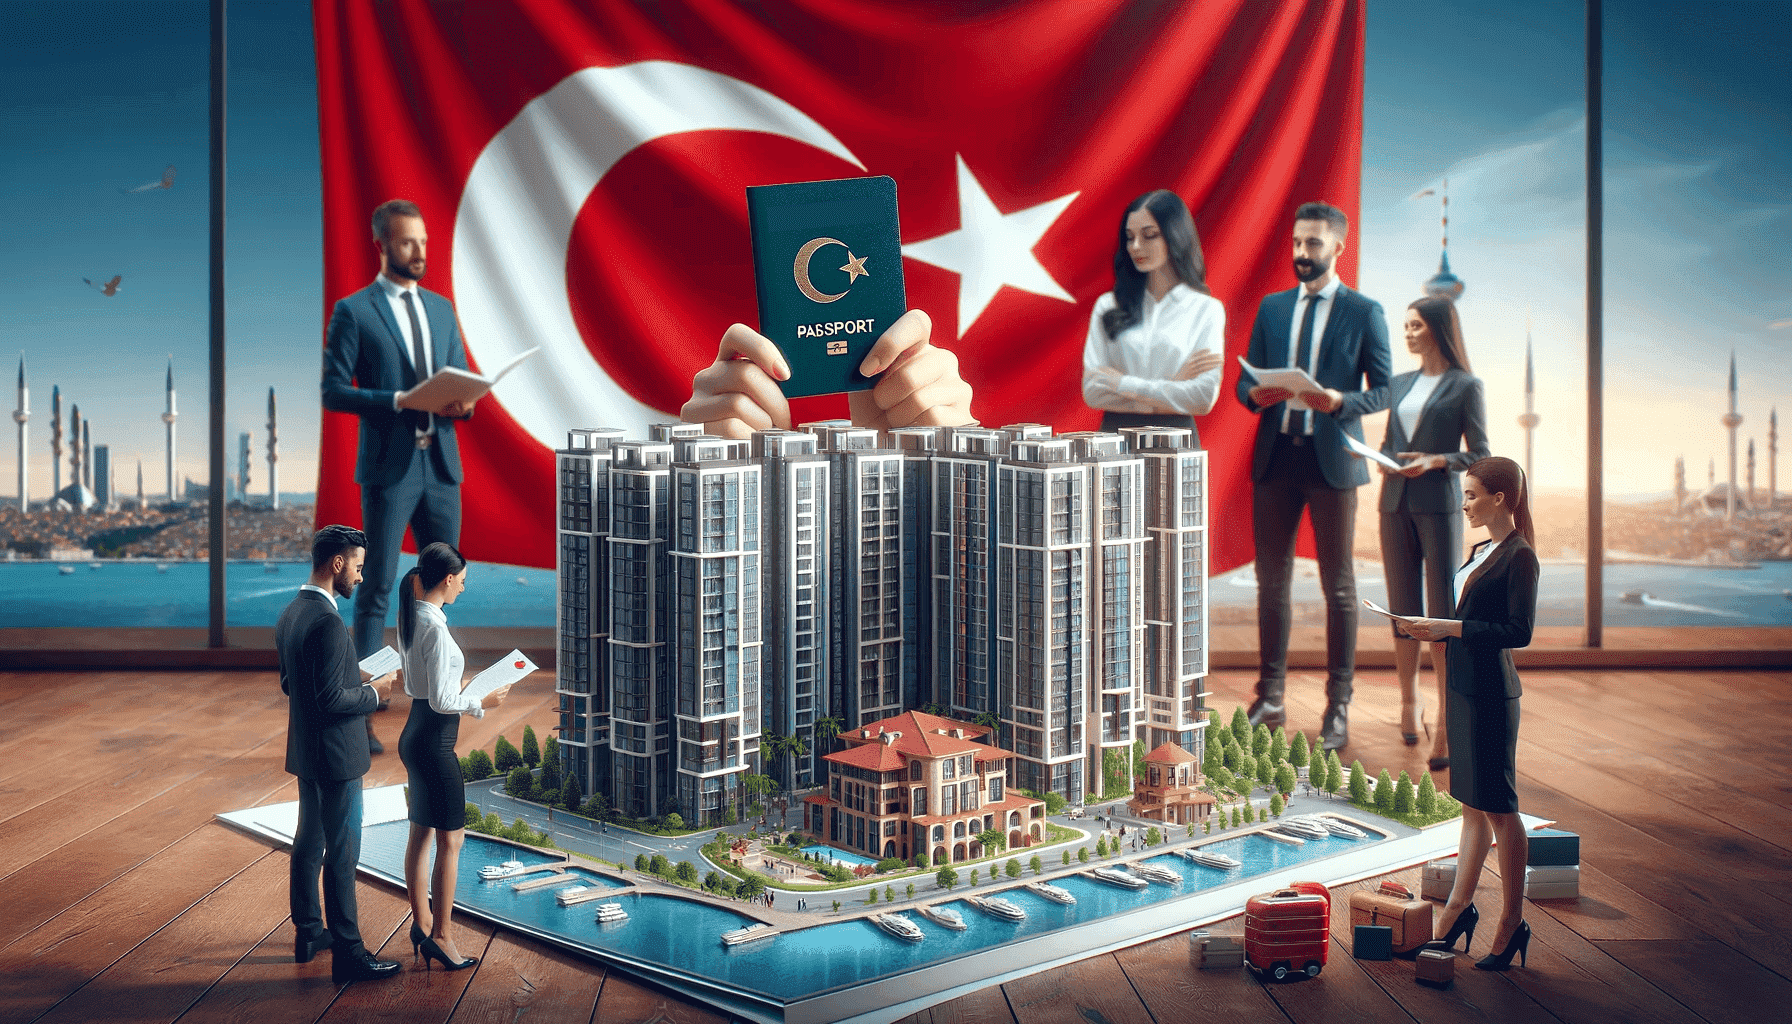 How to obtain Turkish citizenship